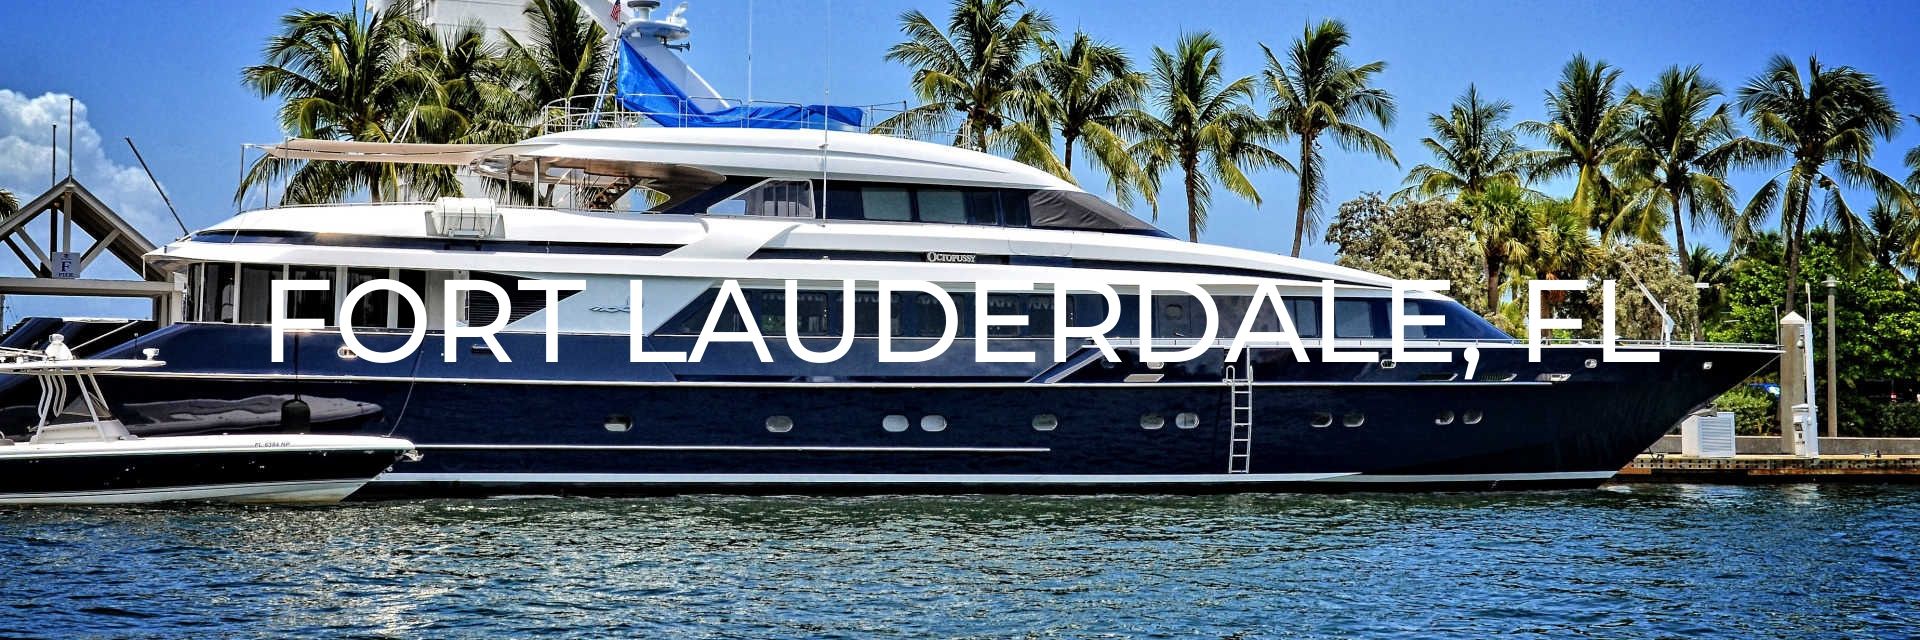 Sleek blue yacht in Fort Lauderdale marina